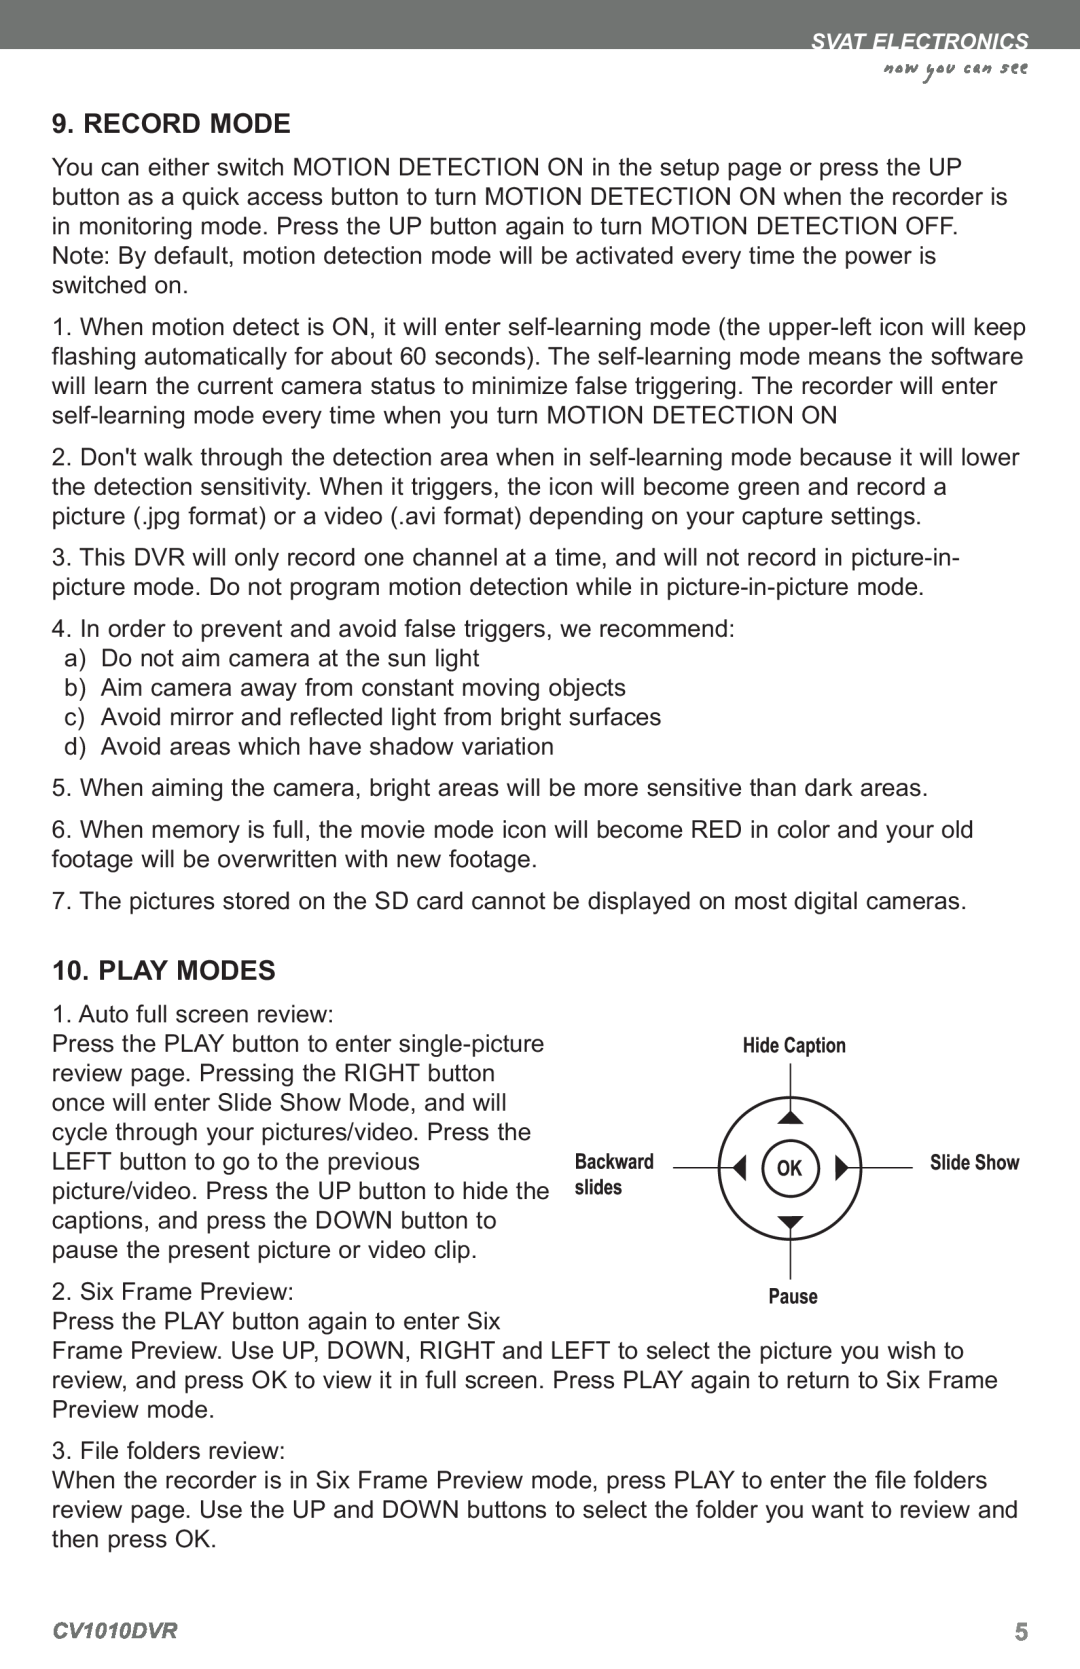 SVAT Electronics CV1010 instruction manual Record Mode, Play Modes 